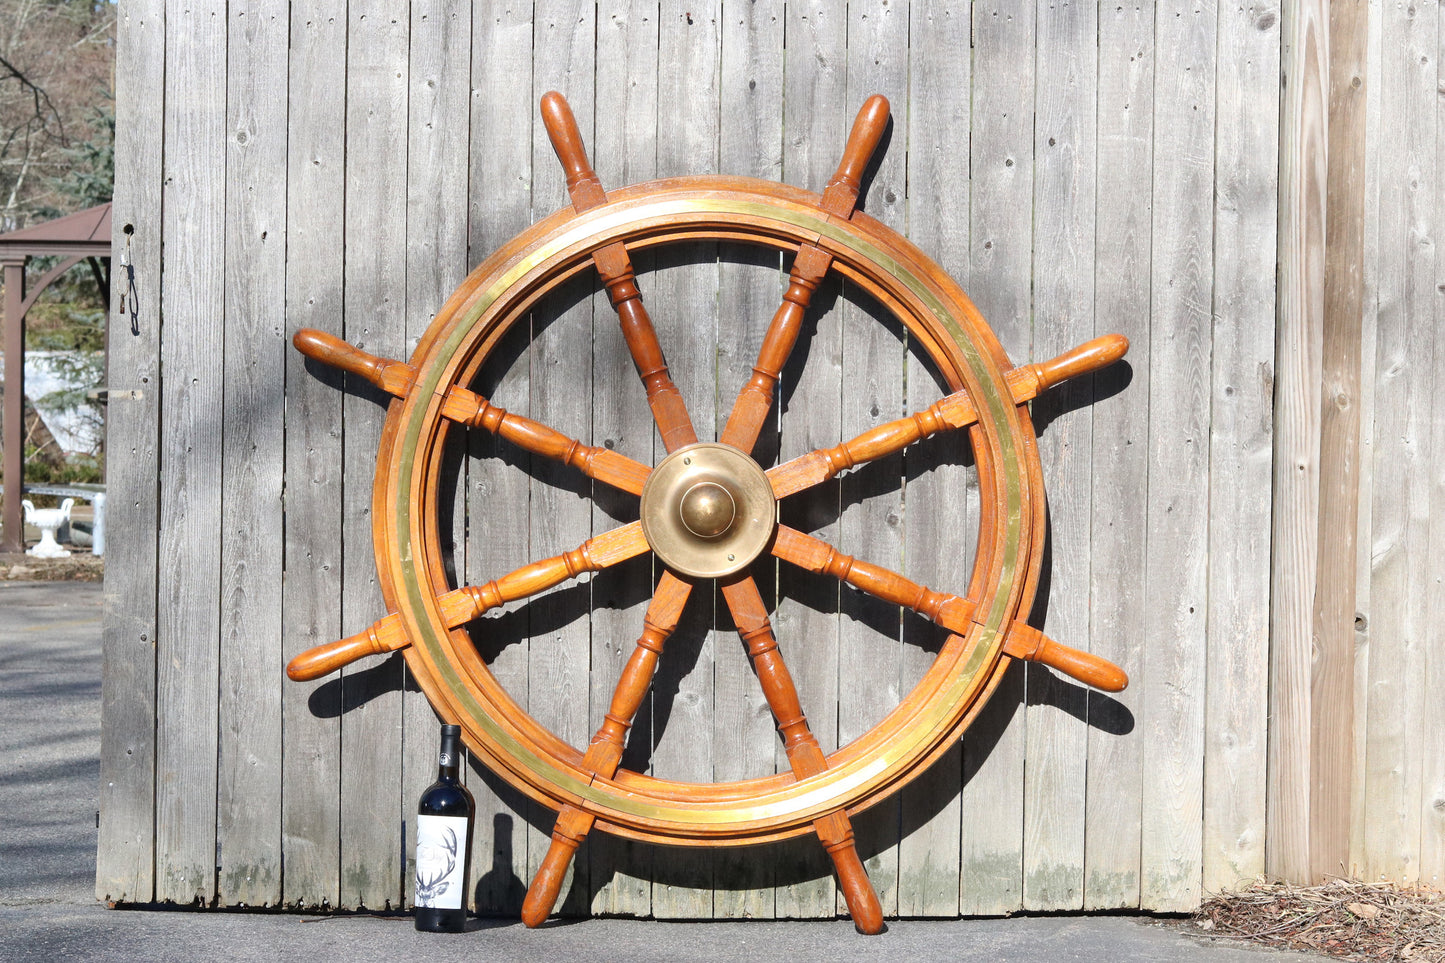 Eight-Spoke Authentic Ship's Wheel - Lannan Gallery